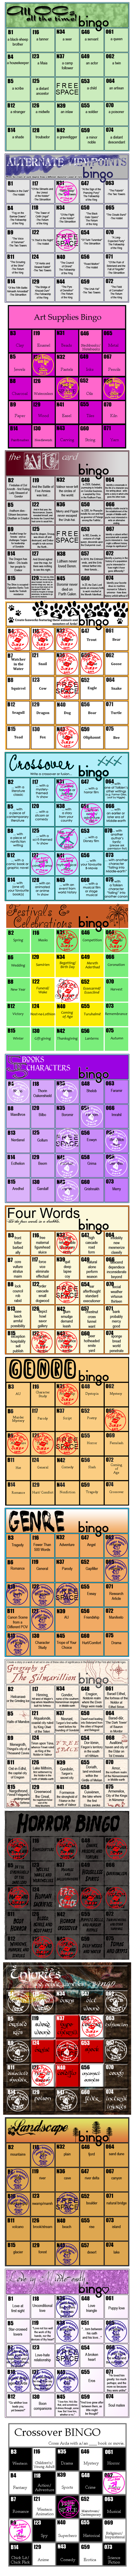 IgnobleBard's Bingo Cards